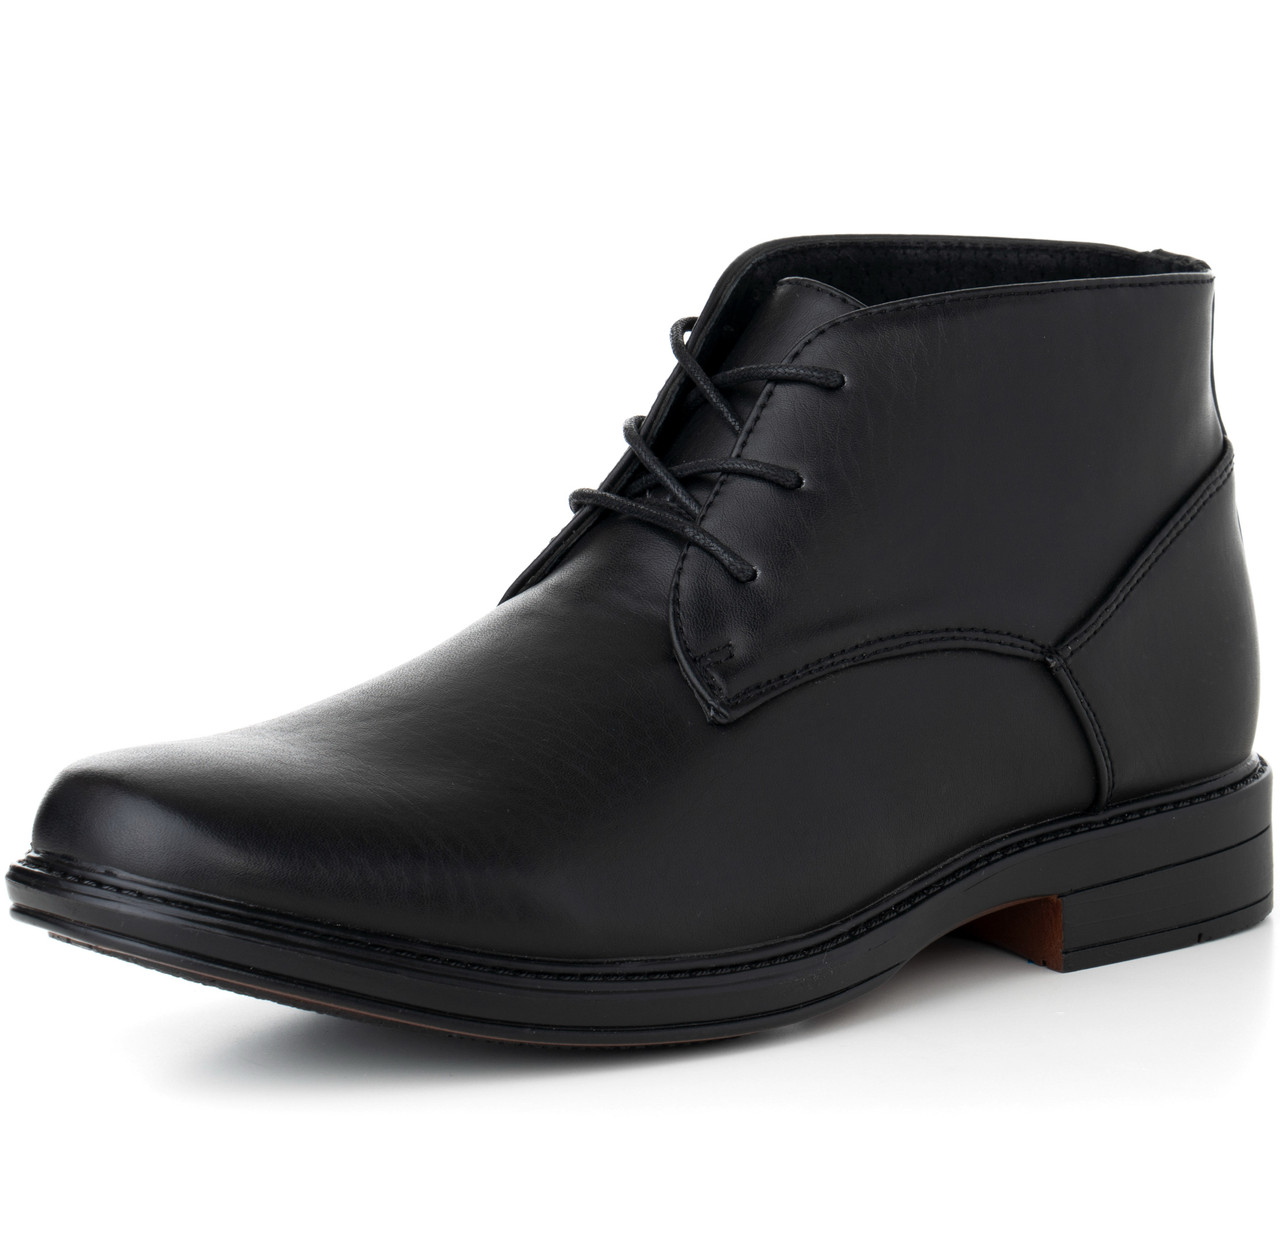 dressy black boots